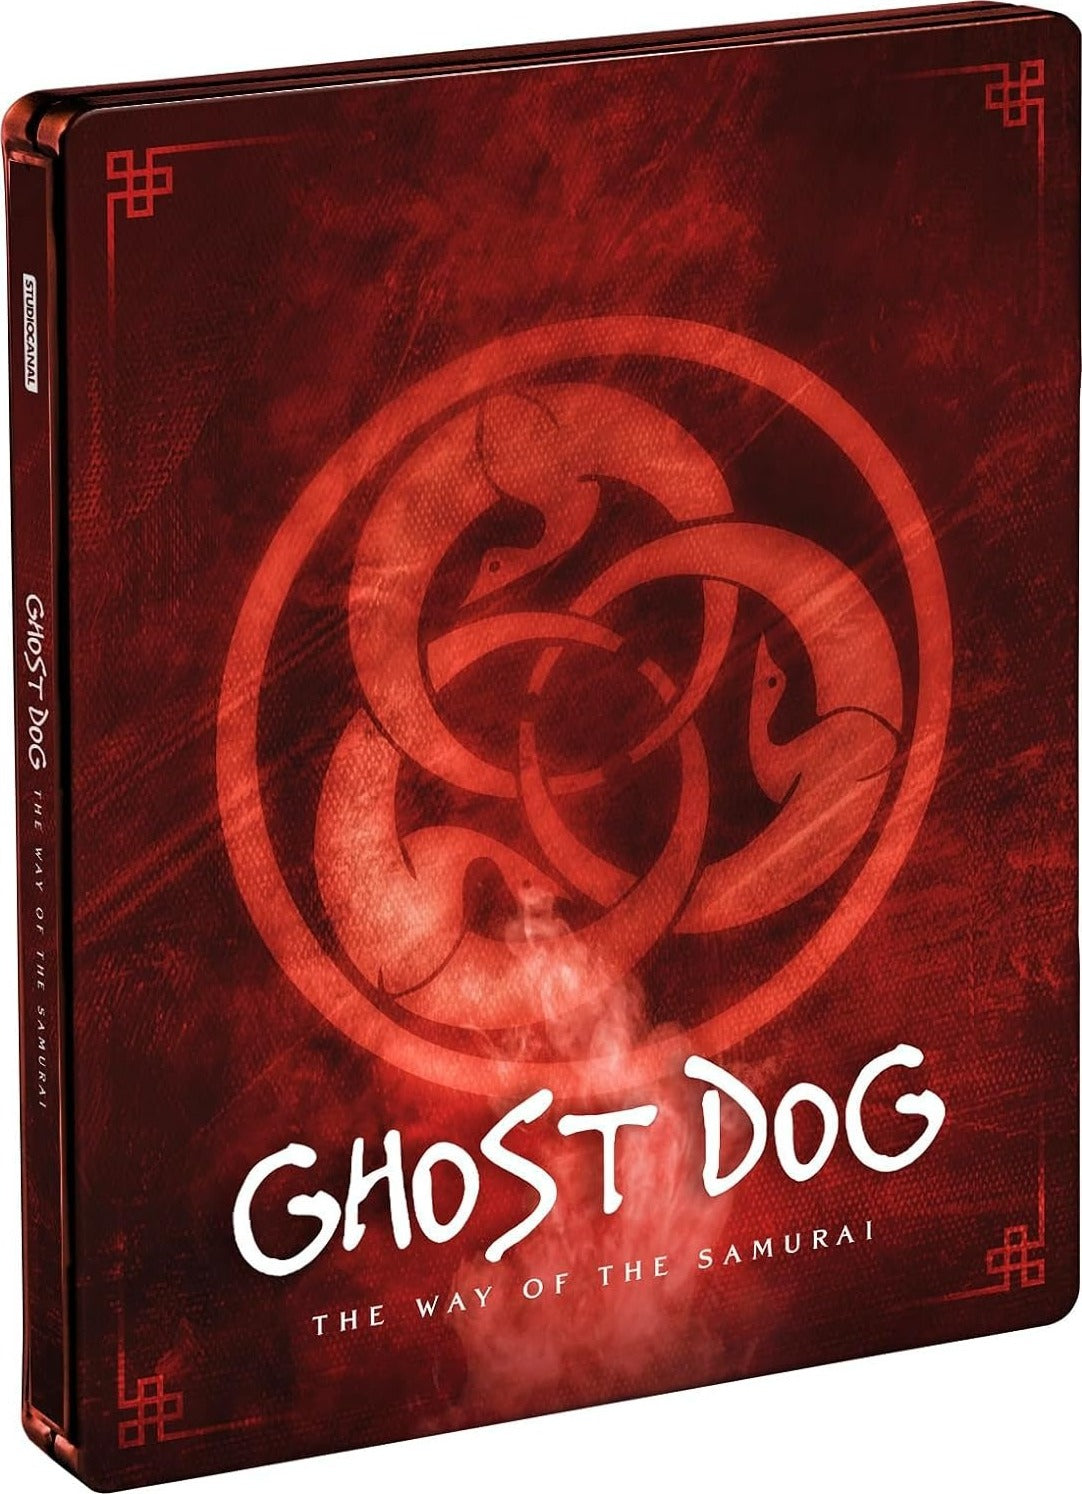 GHOST DOG: THE WAY OF THE SAMURAI (REGION FREE/B IMPORT - LIMITED EDITION) 4K UHD/BLU-RAY STEELBOOK